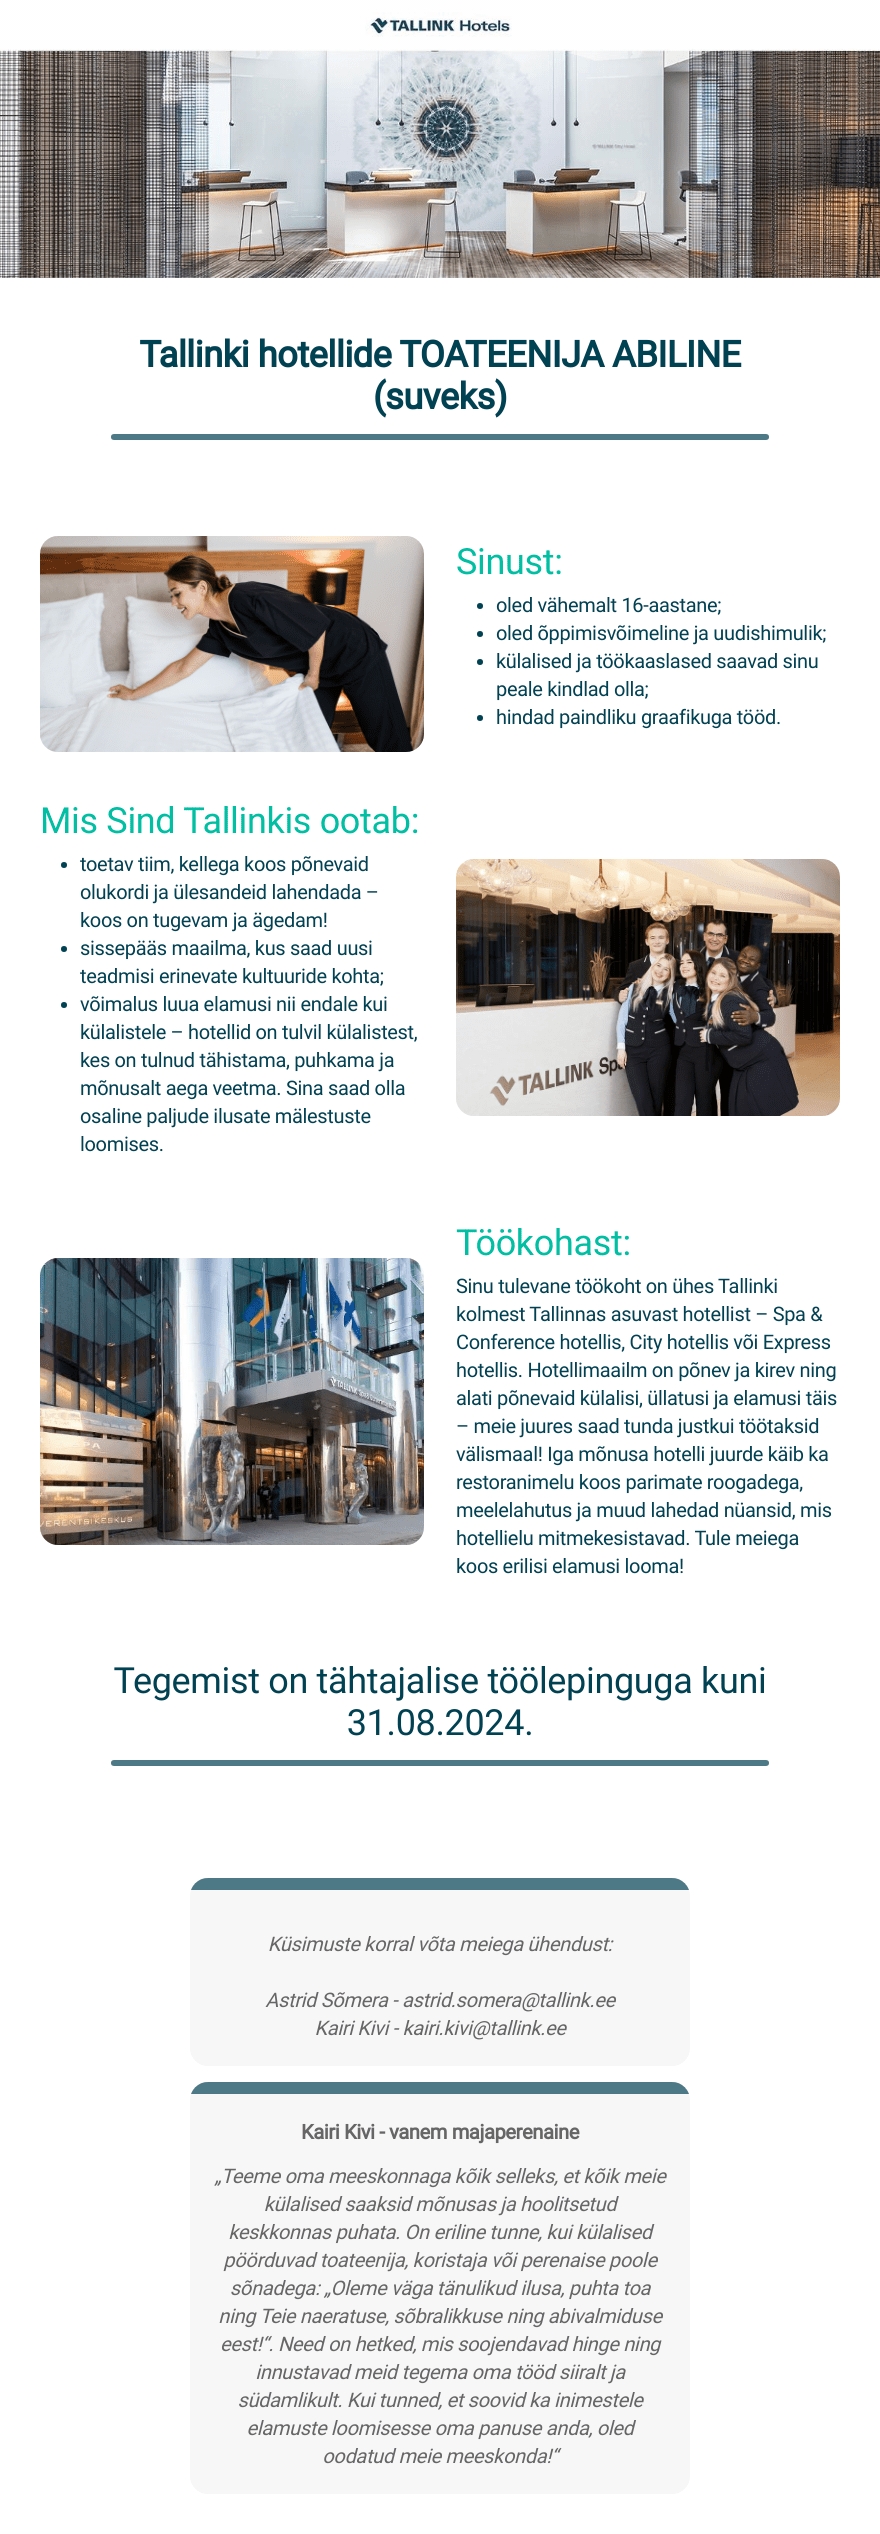 Tallink Grupp AS Tallinki hotellide toateenija abiline (suveks)